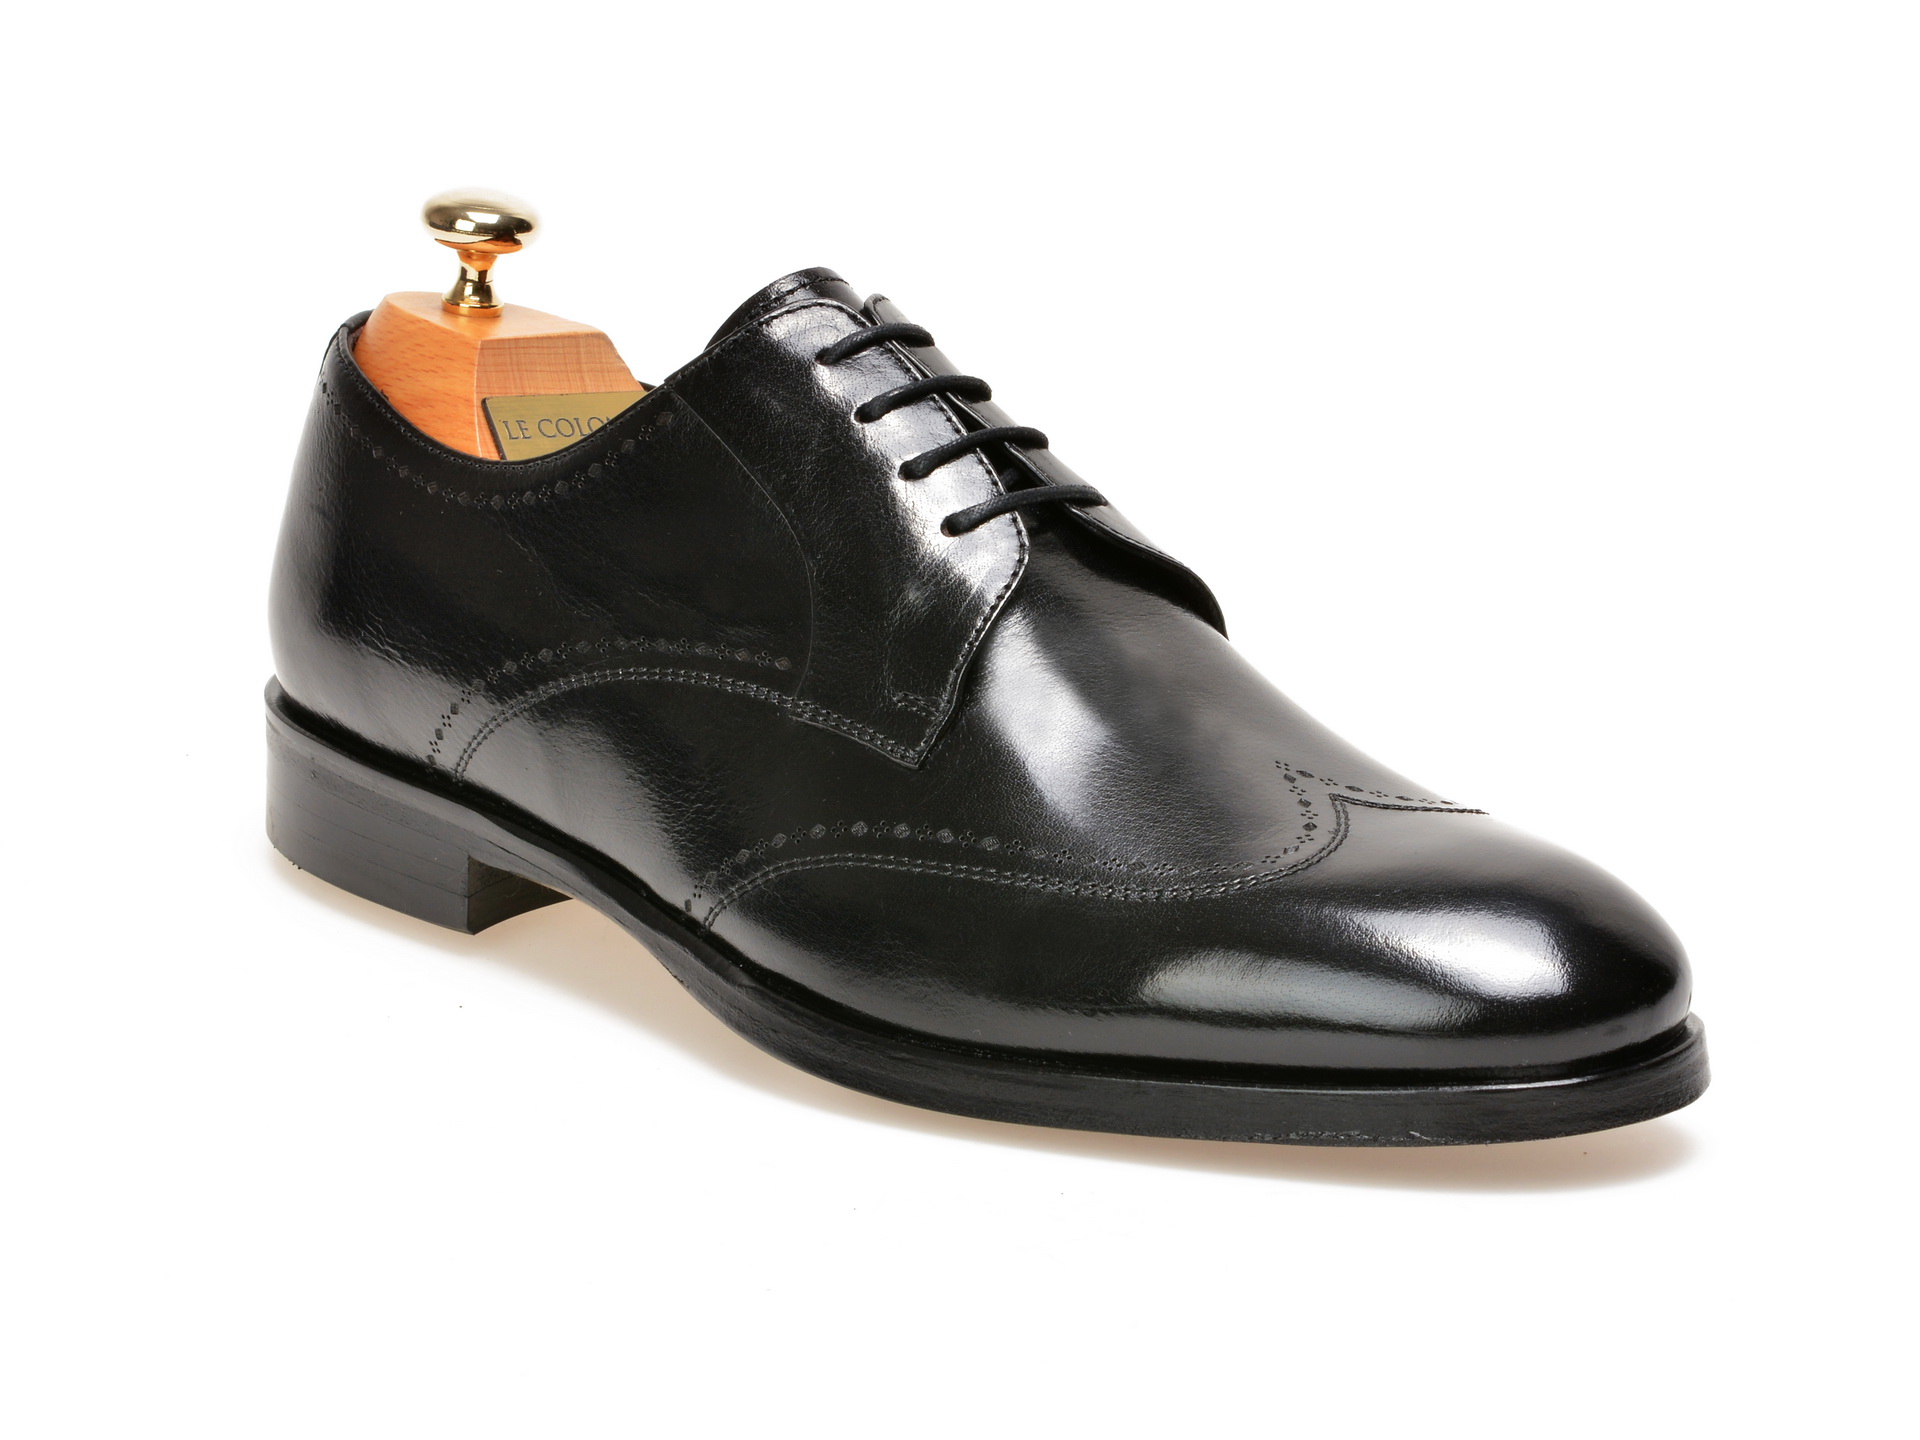 Pantofi LE COLONEL negri, 43410, din piele naturala